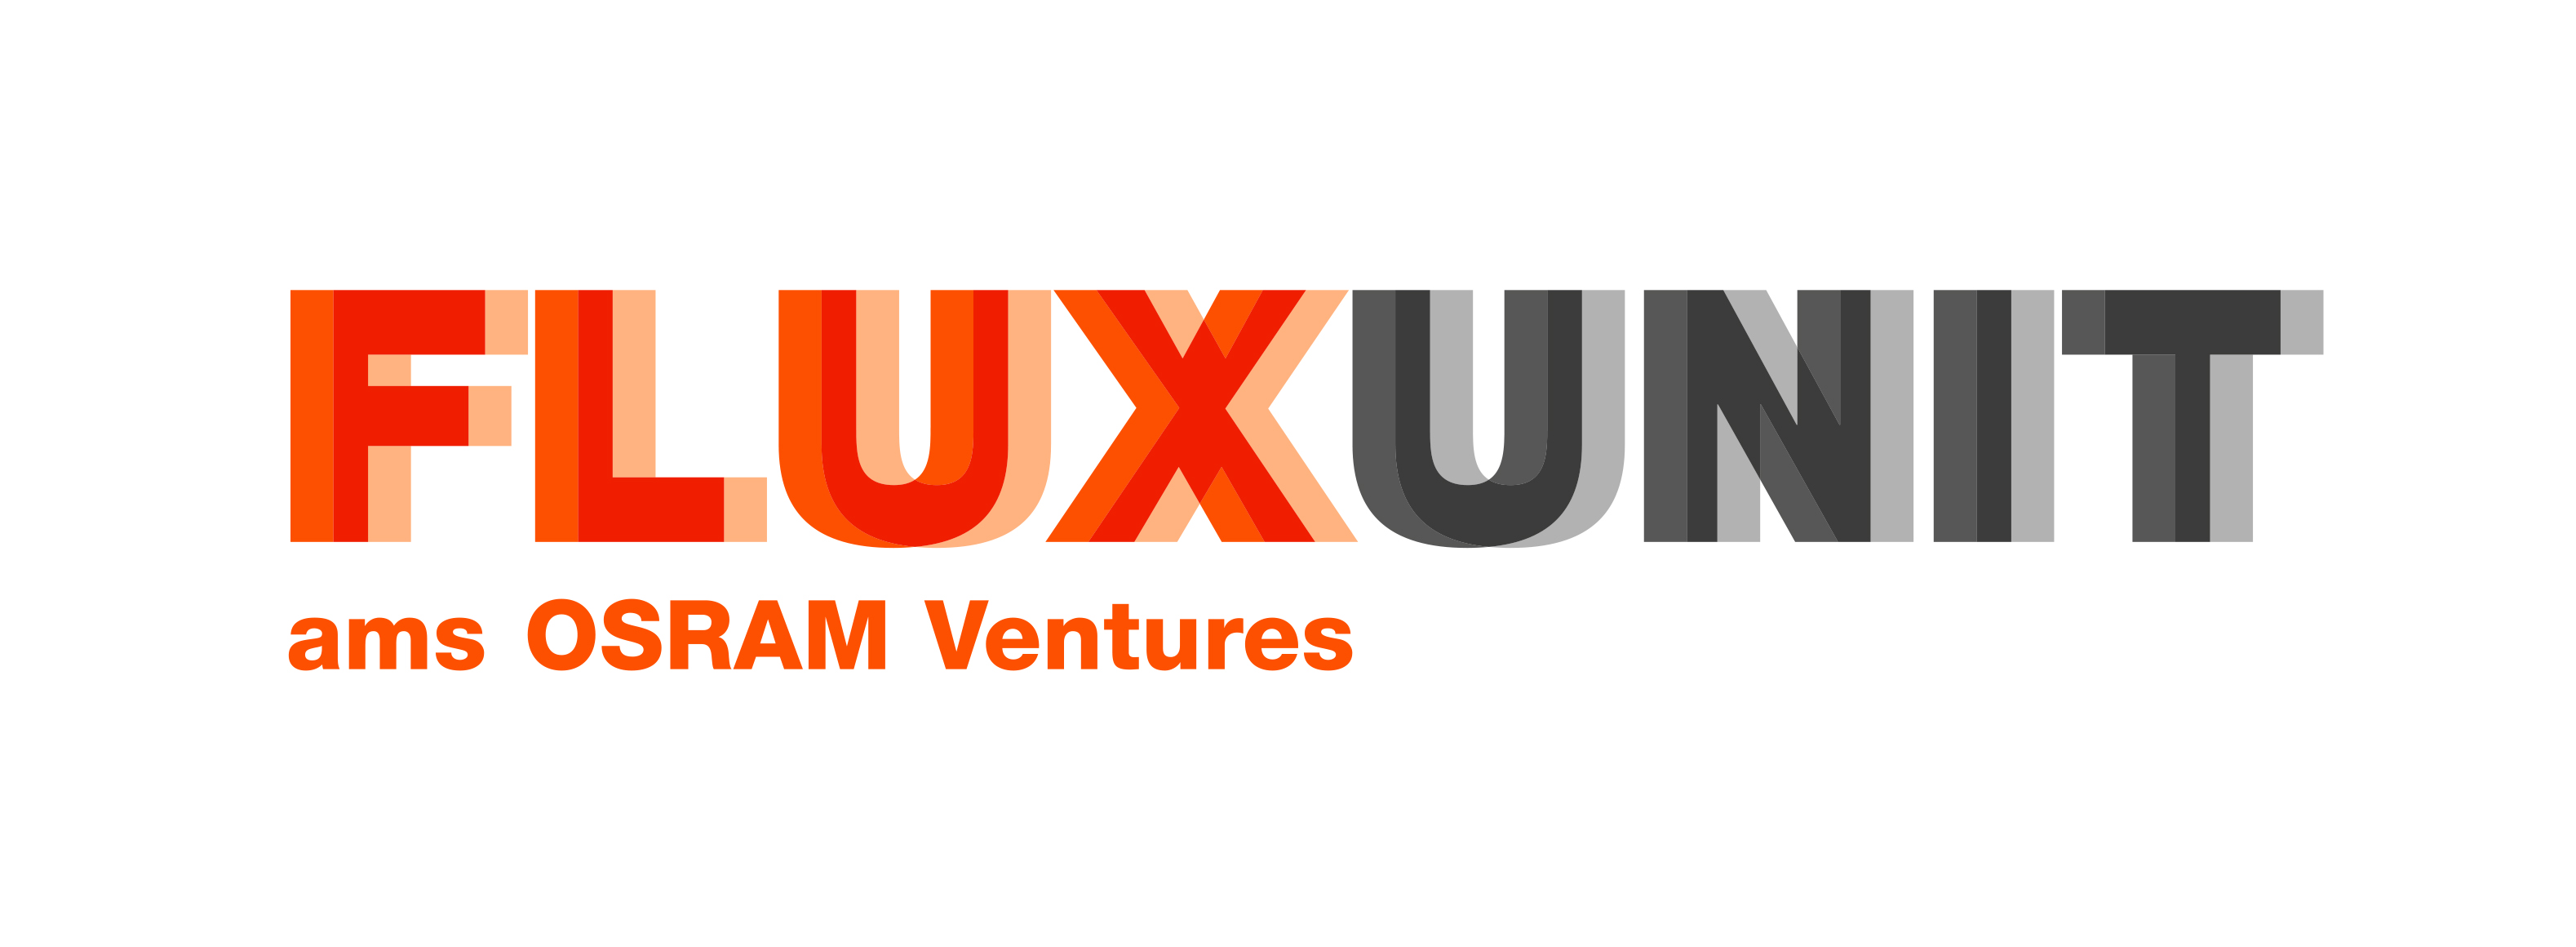 Fluxunit - ams OSRAM Ventures